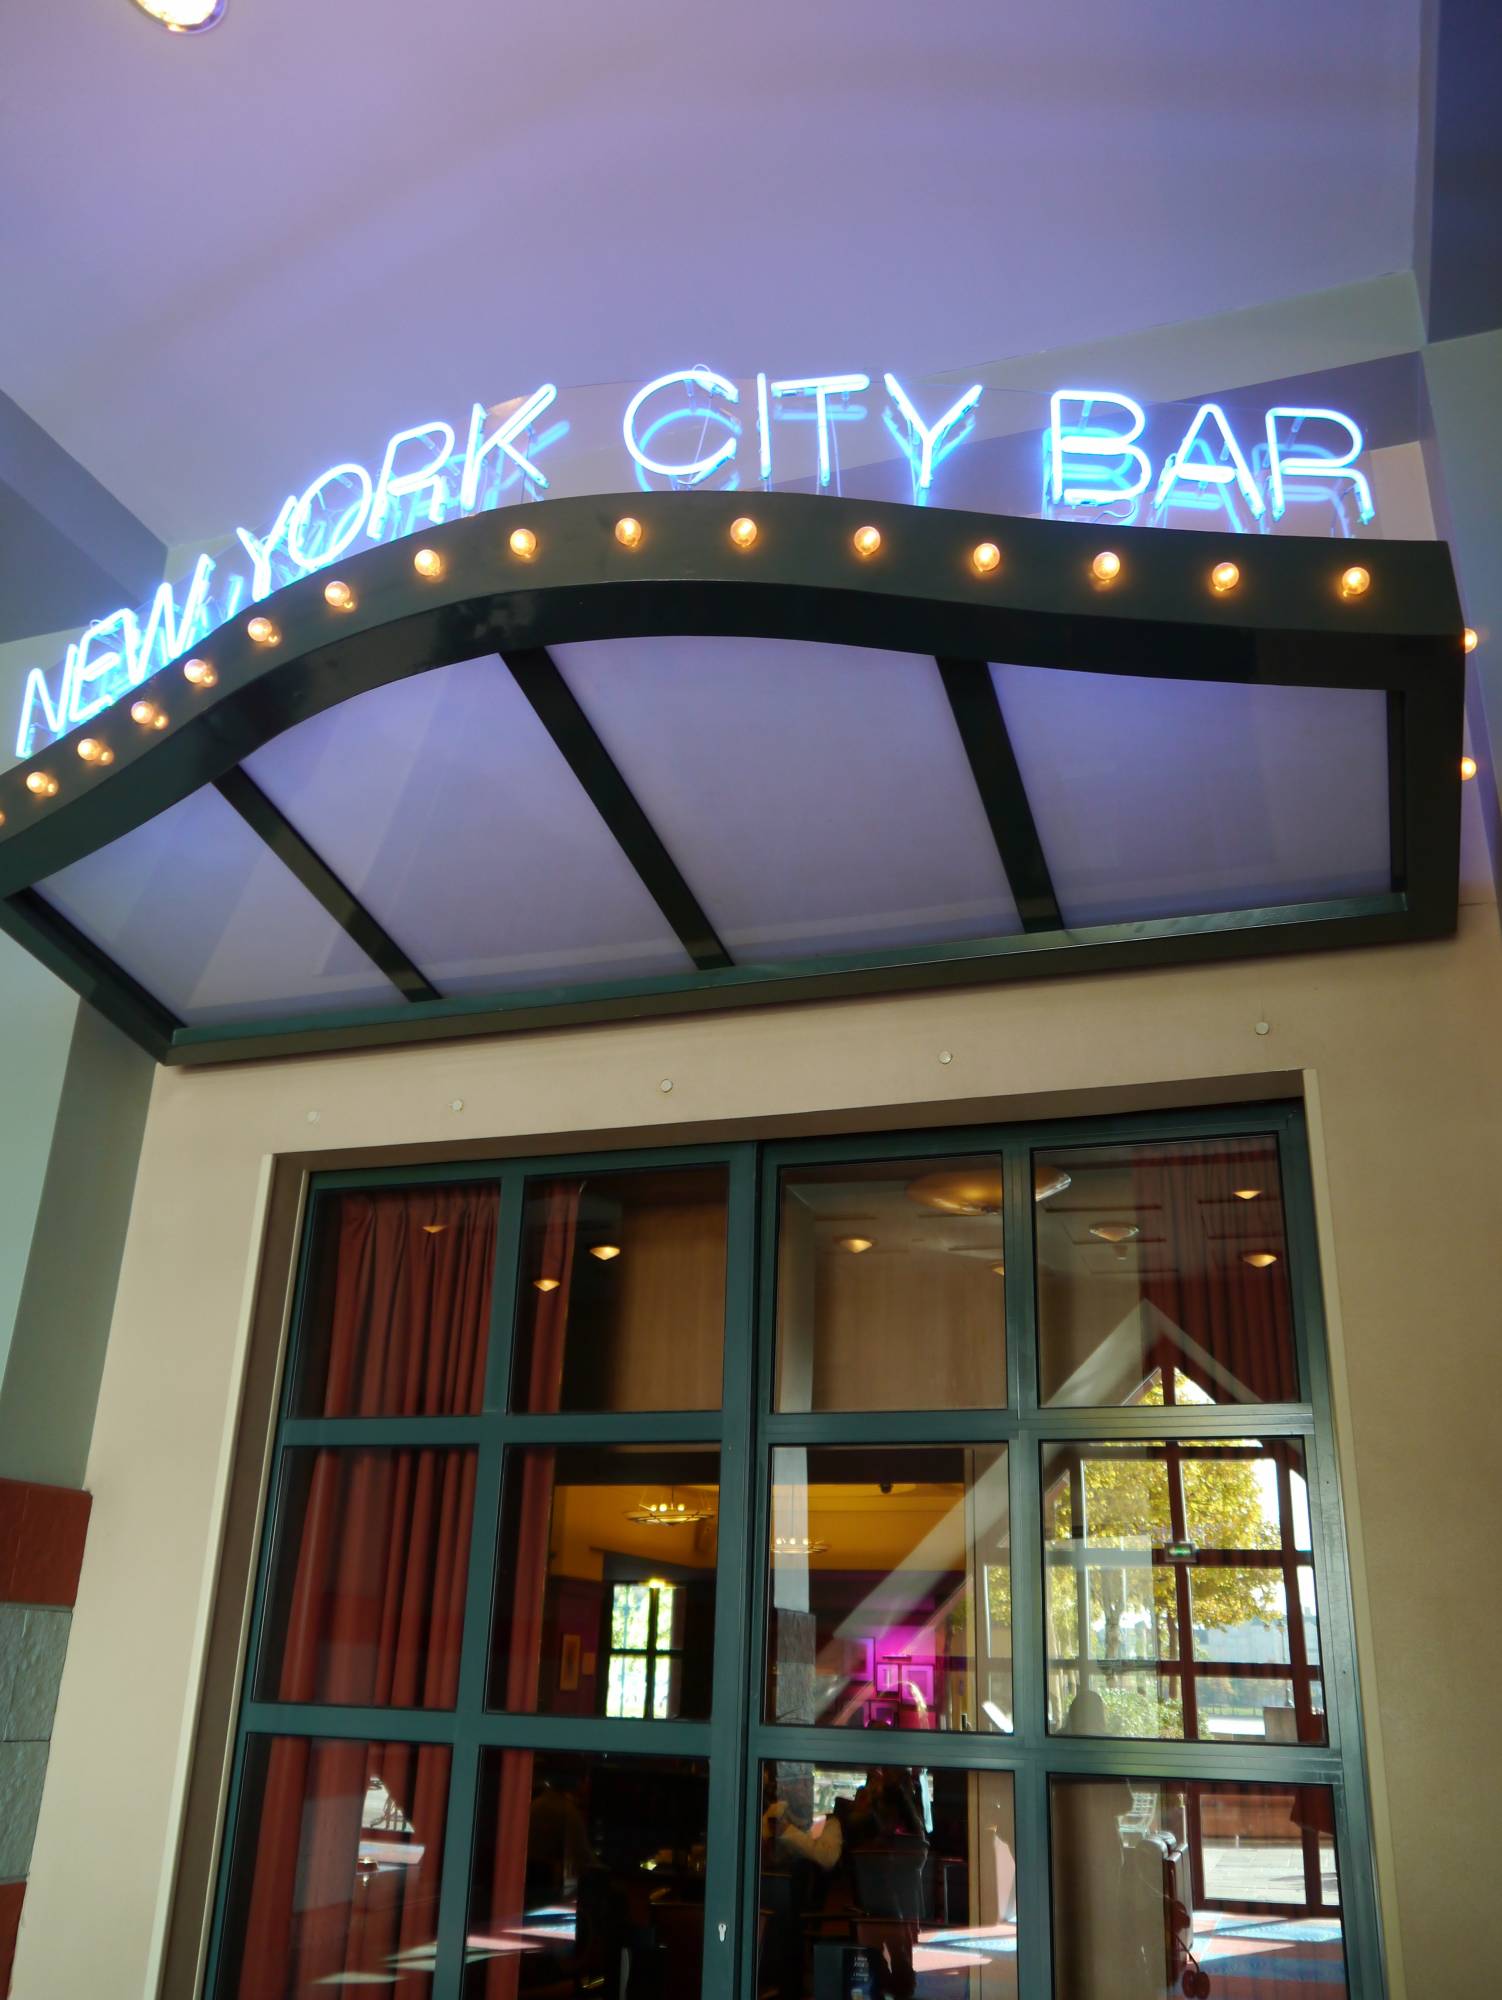 Hotel New York - New York City Bar